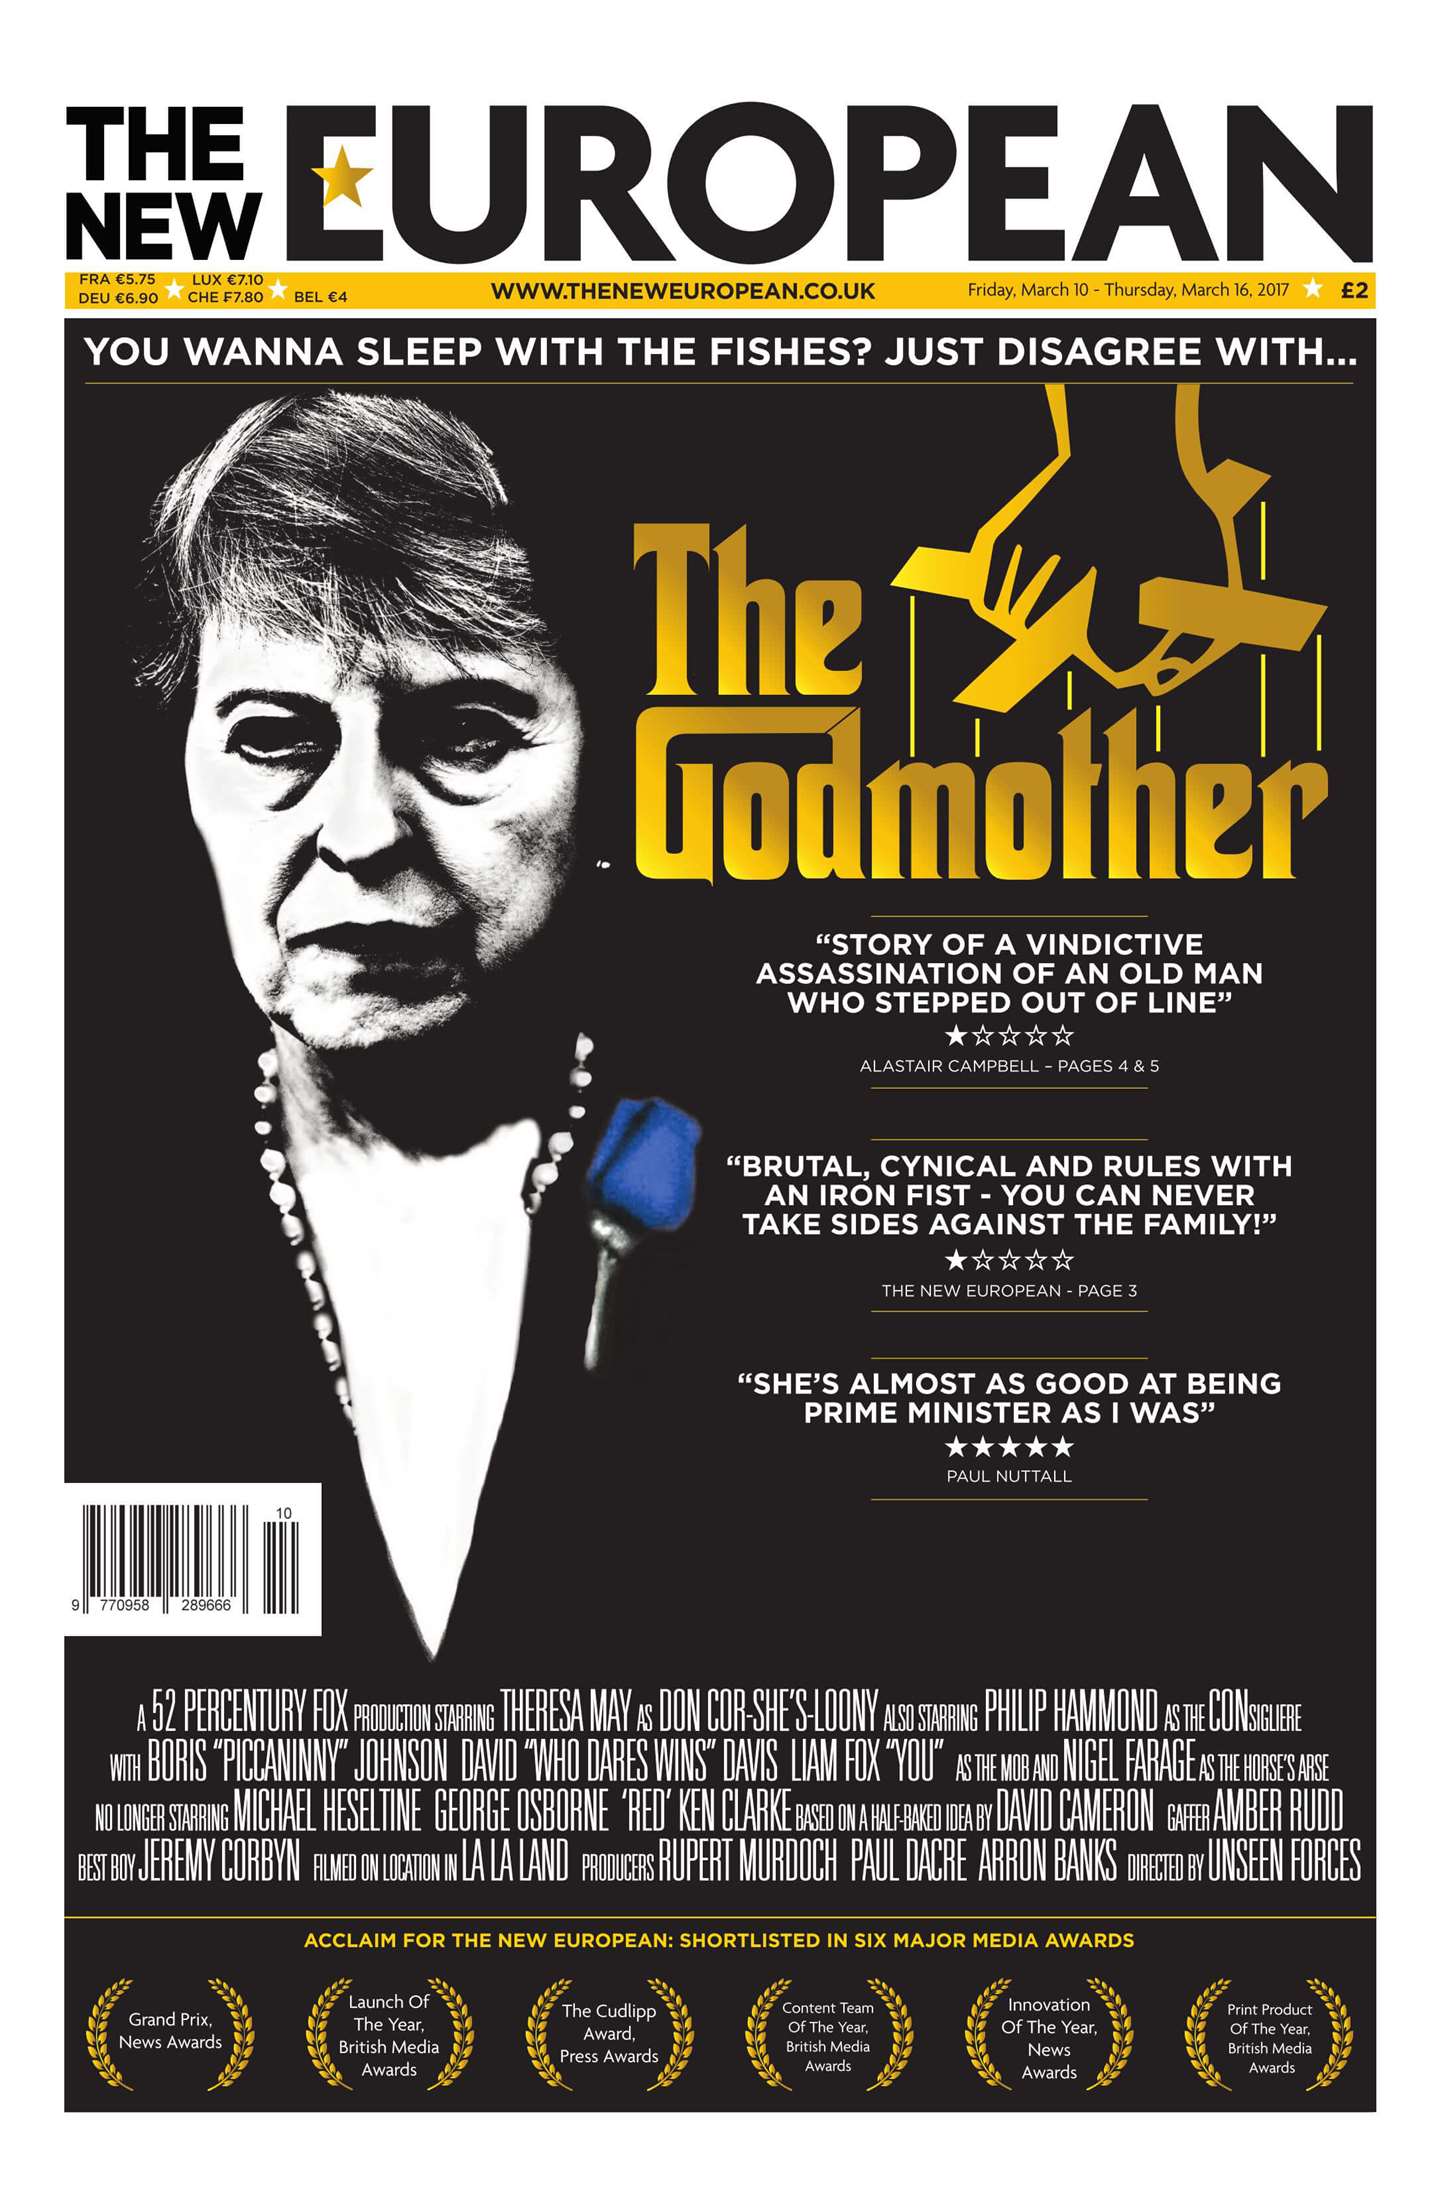 The New European The Godmother (Mar 10, 2017).jpg